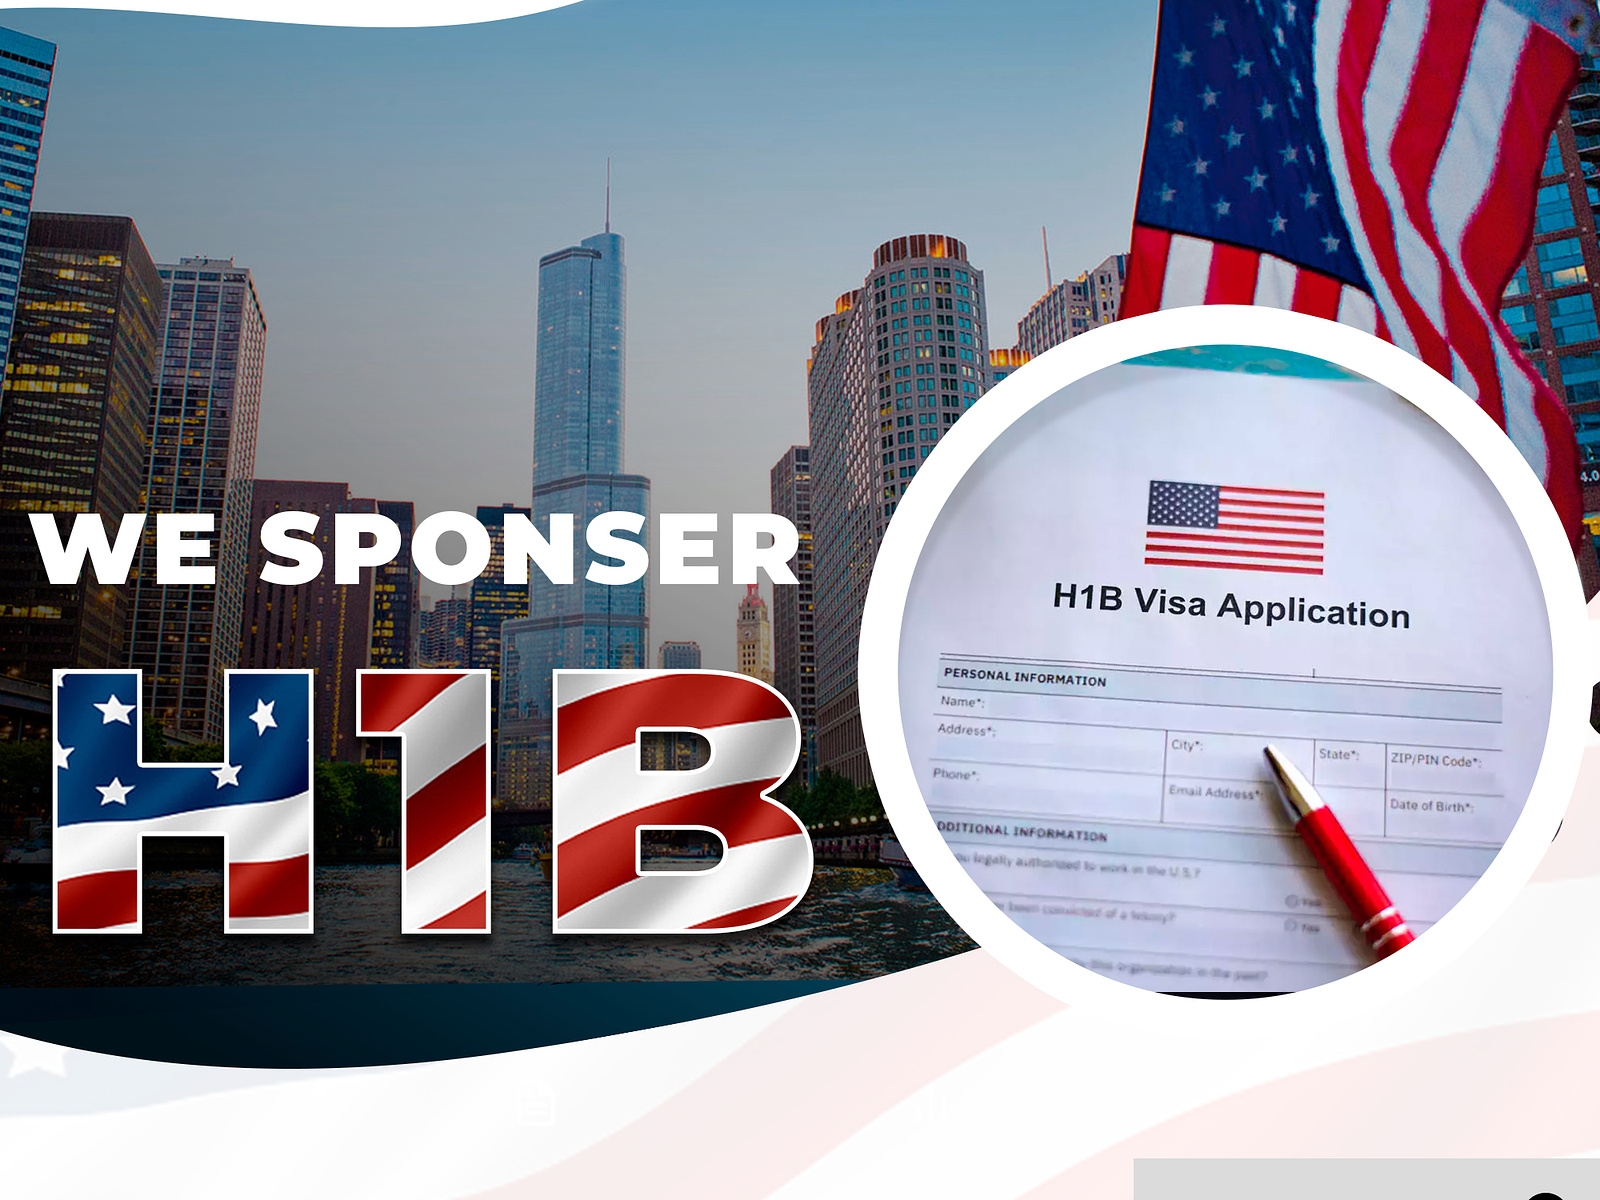 H1B Visa Flyer by LV Creates on Dribbble